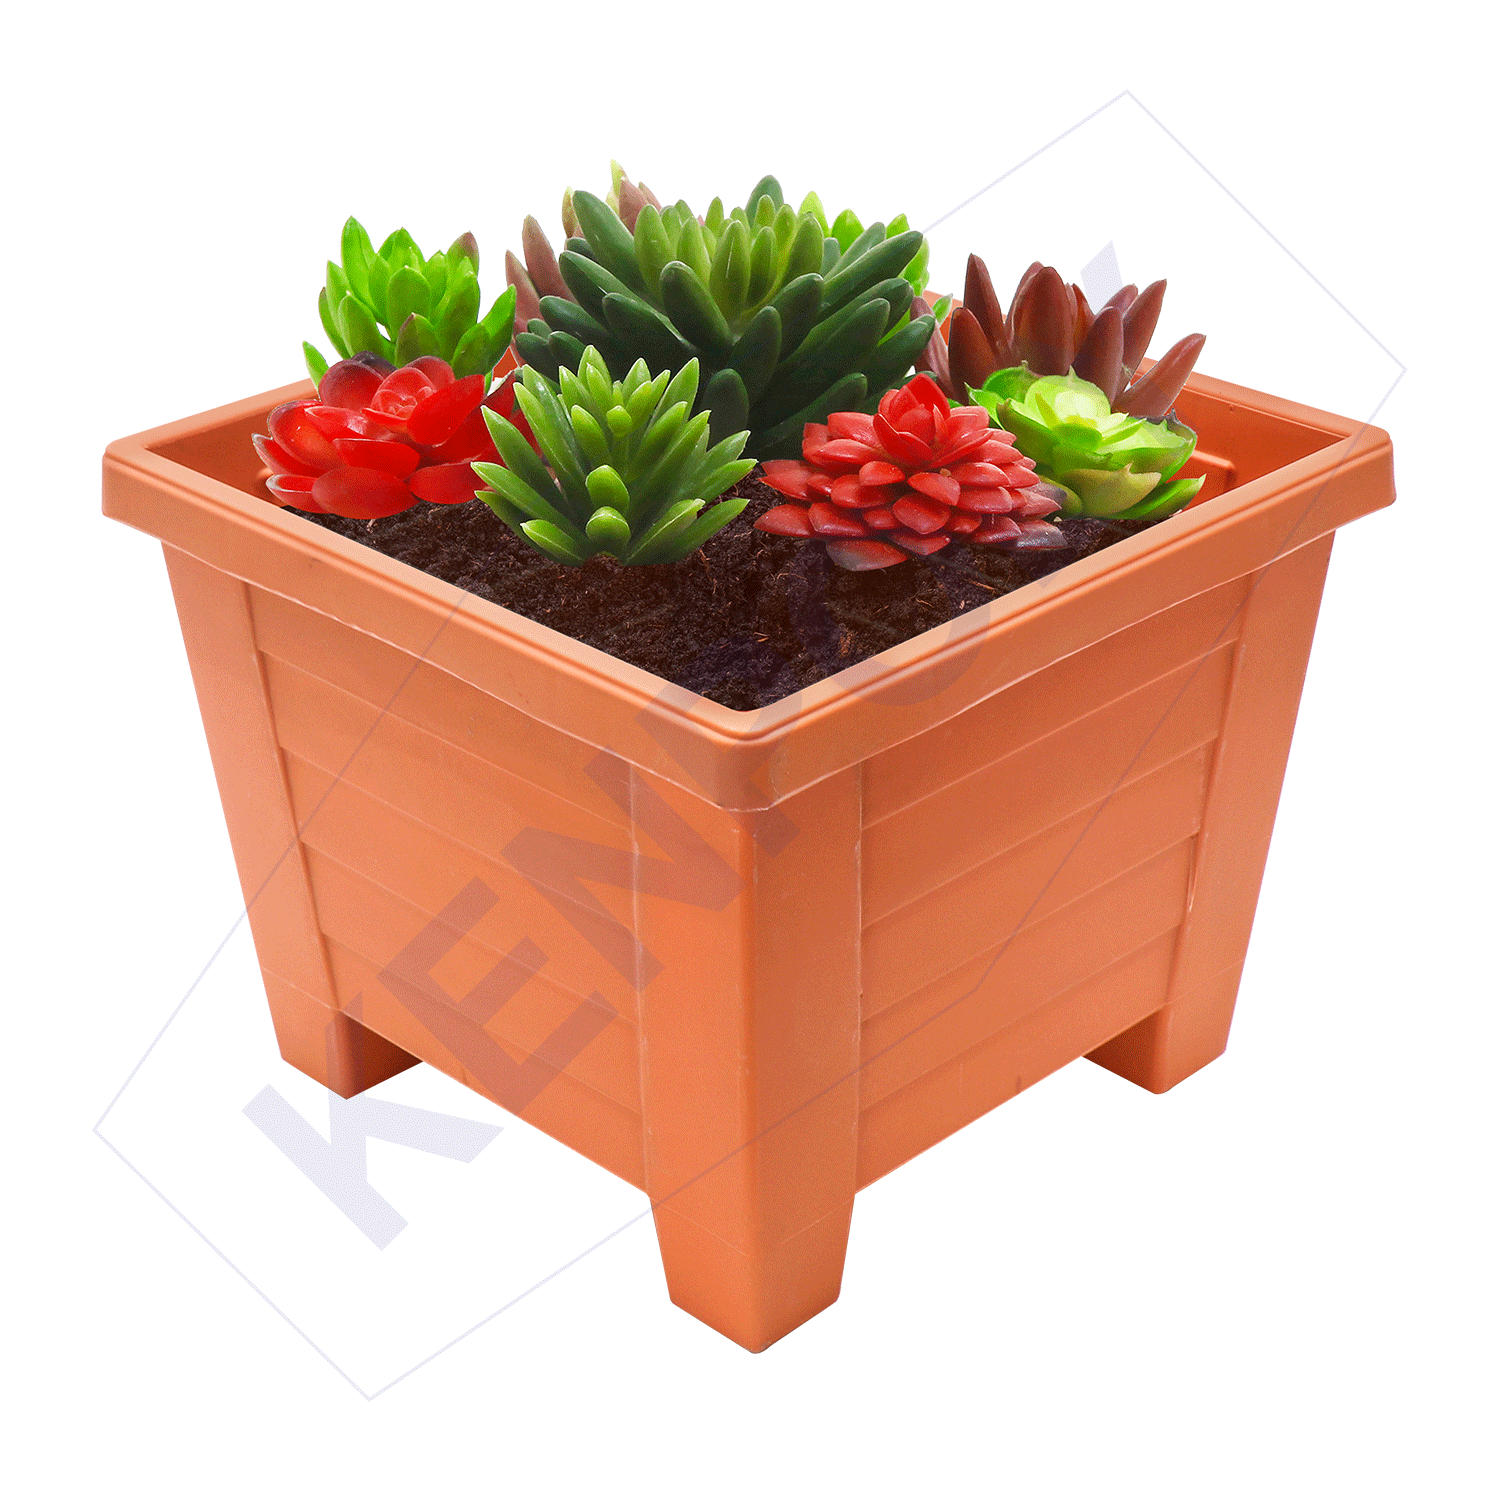 Kenpoly Flower Pot - Large Square Planter 7 (H339 x W385 x L385 mm, 29 Liters)